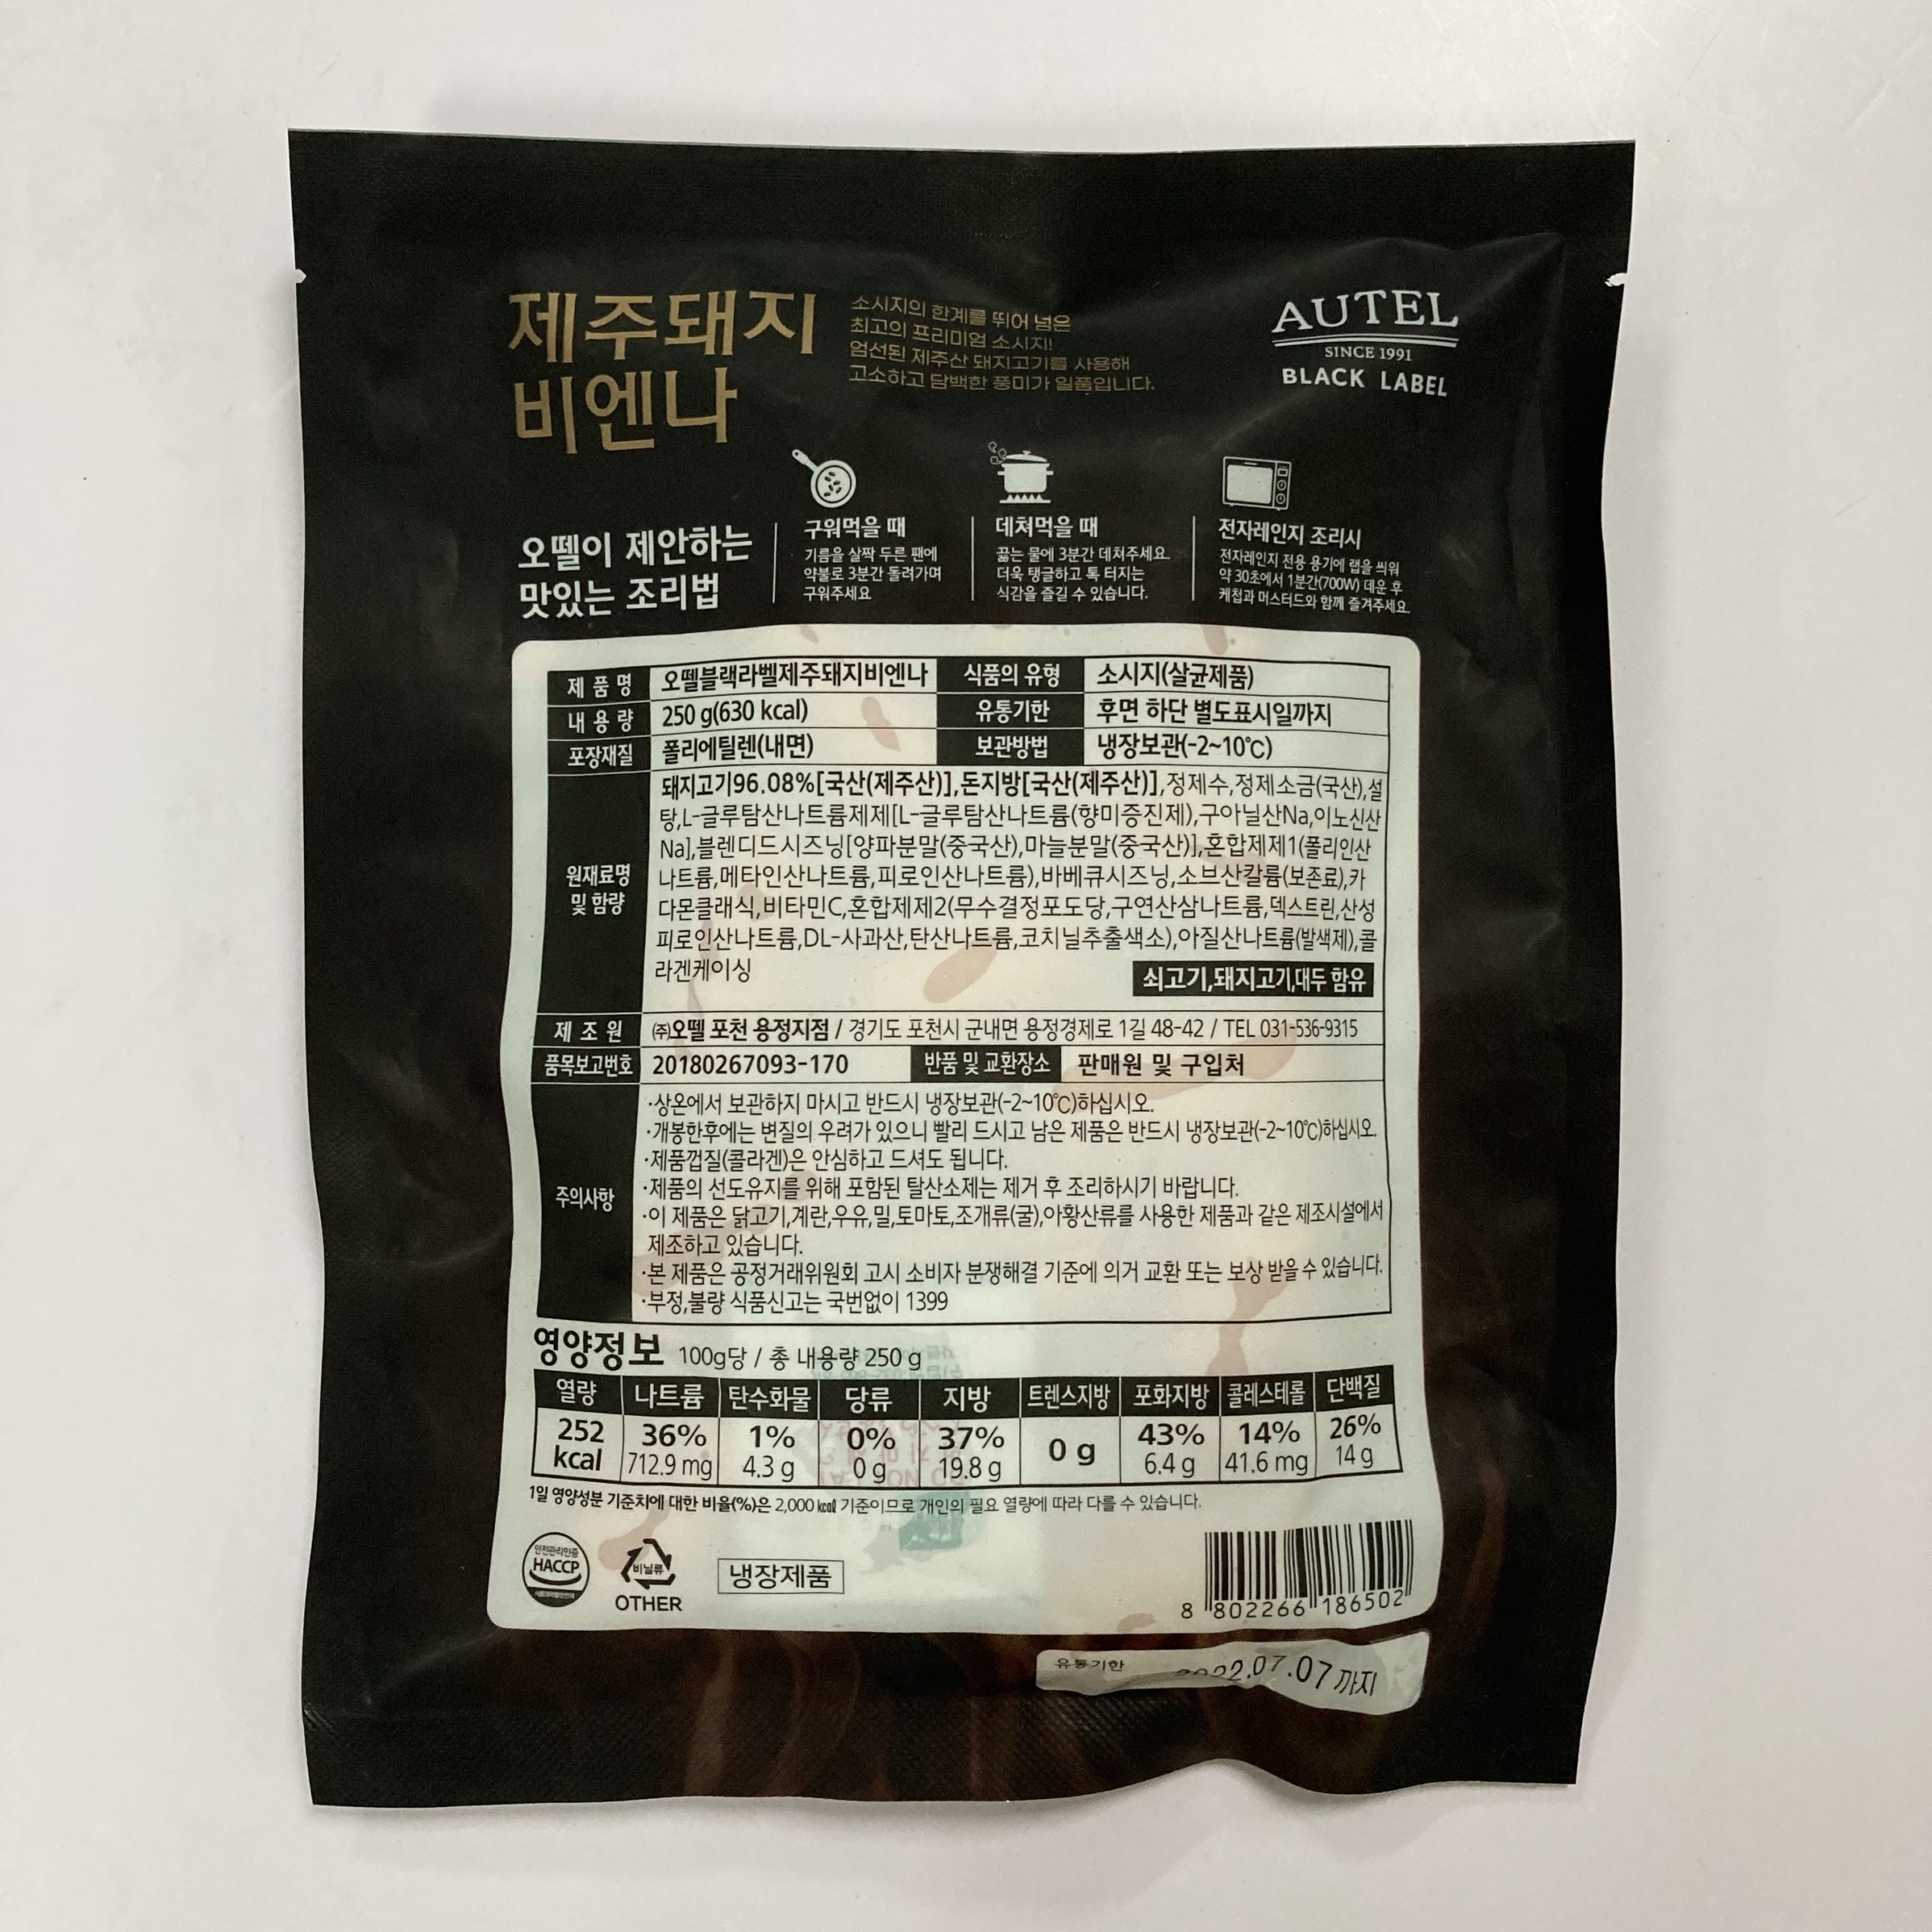 韓國食品-[Autel Black Label] Jeju Pork Vienna Sausage 250g